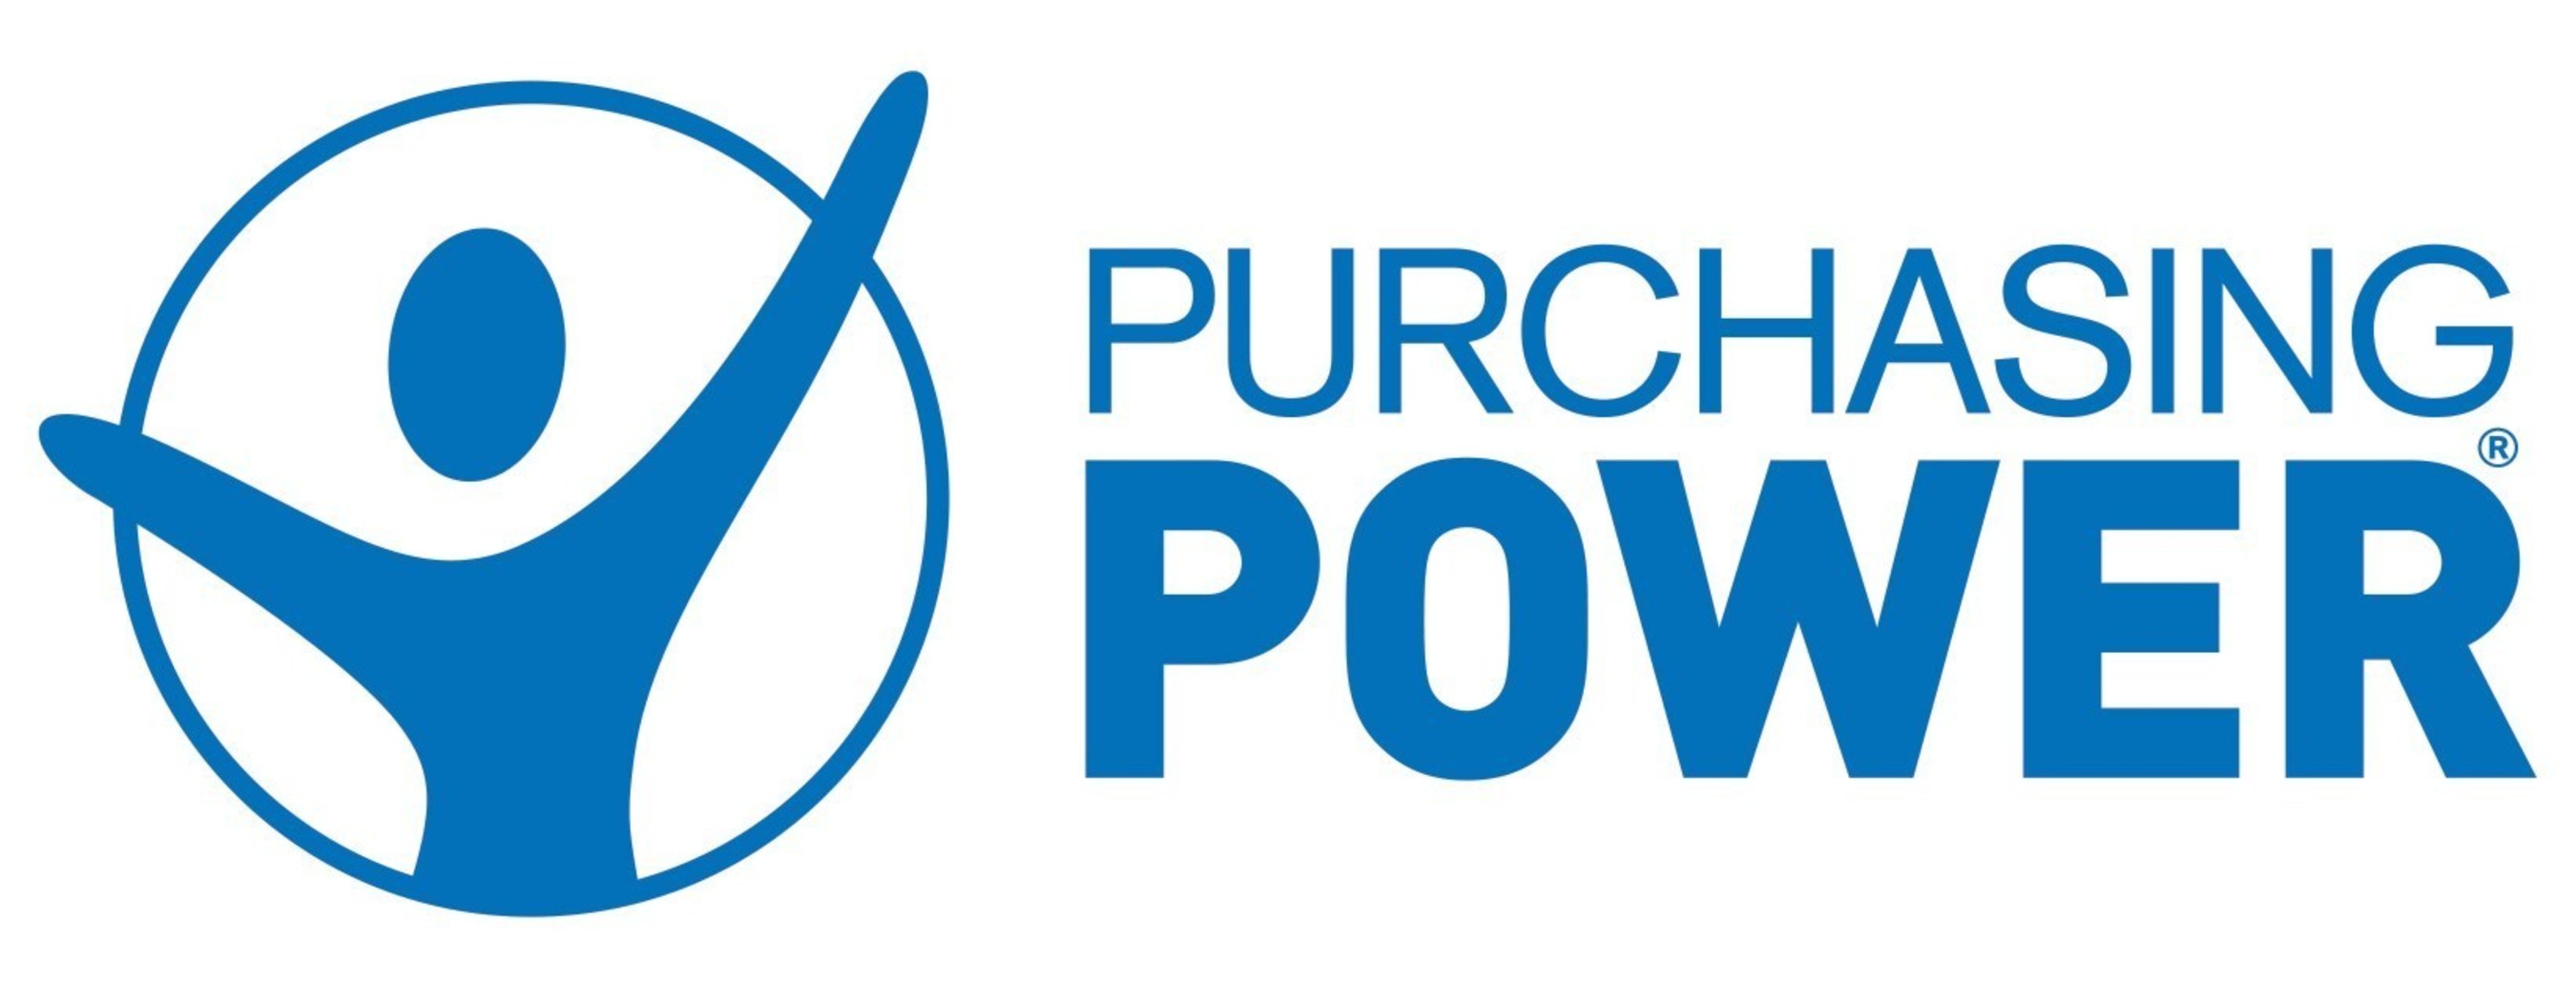 Purchasing Power Logo (PRNewsFoto/Purchasing Power)